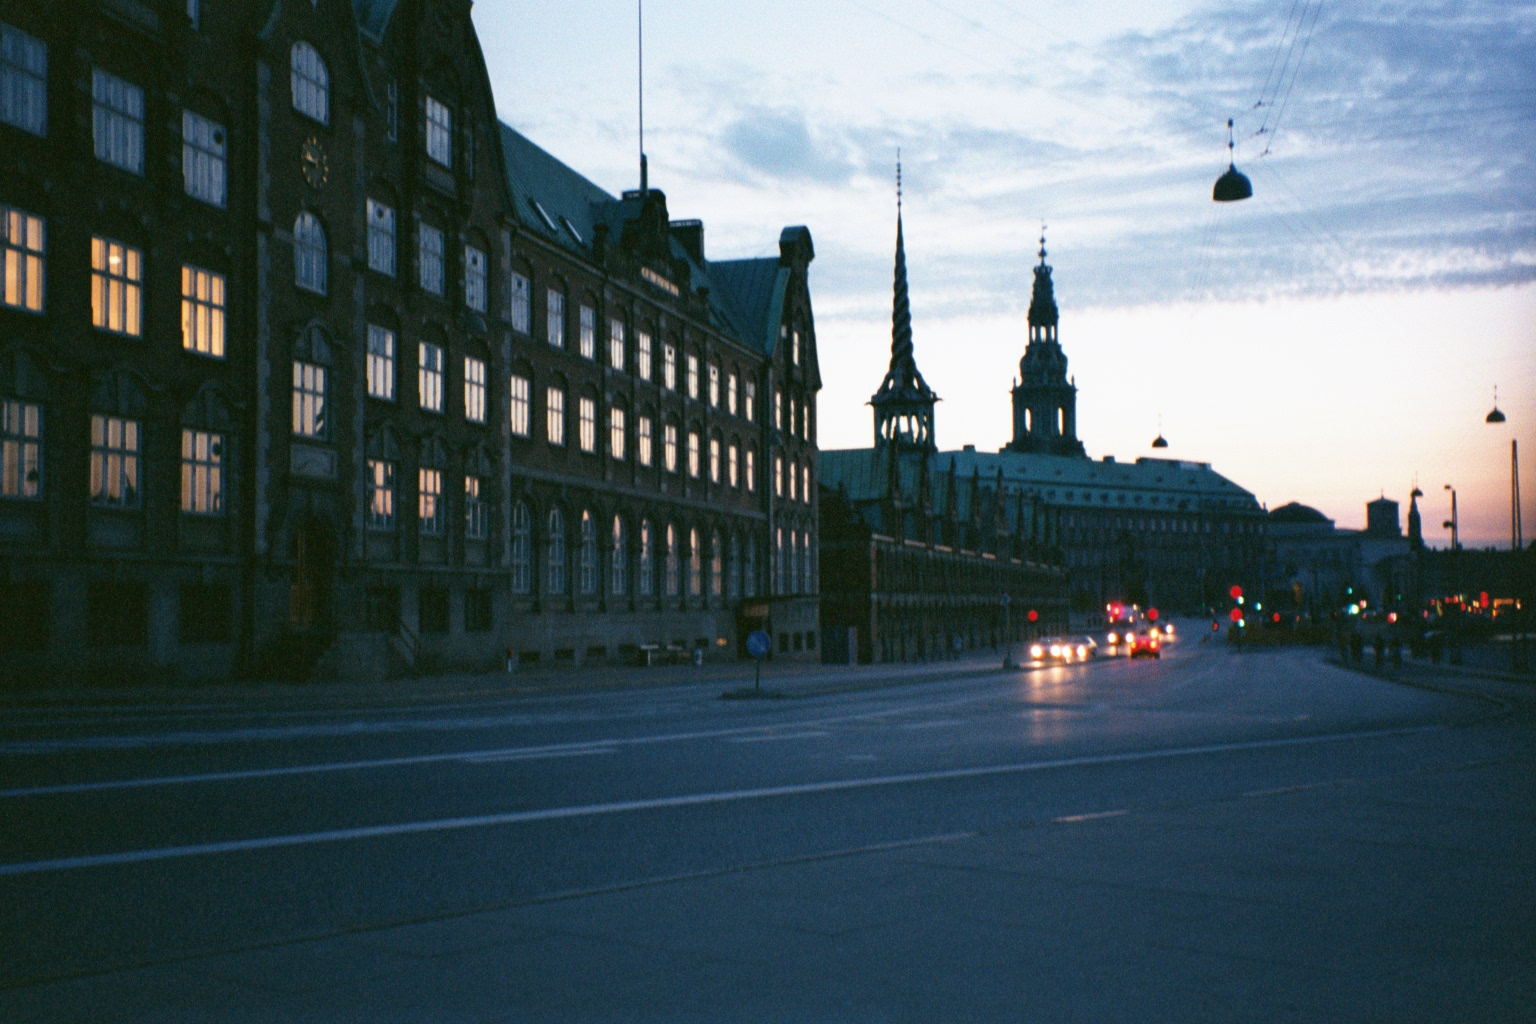 Copenhagen at night, after visiting Christiania